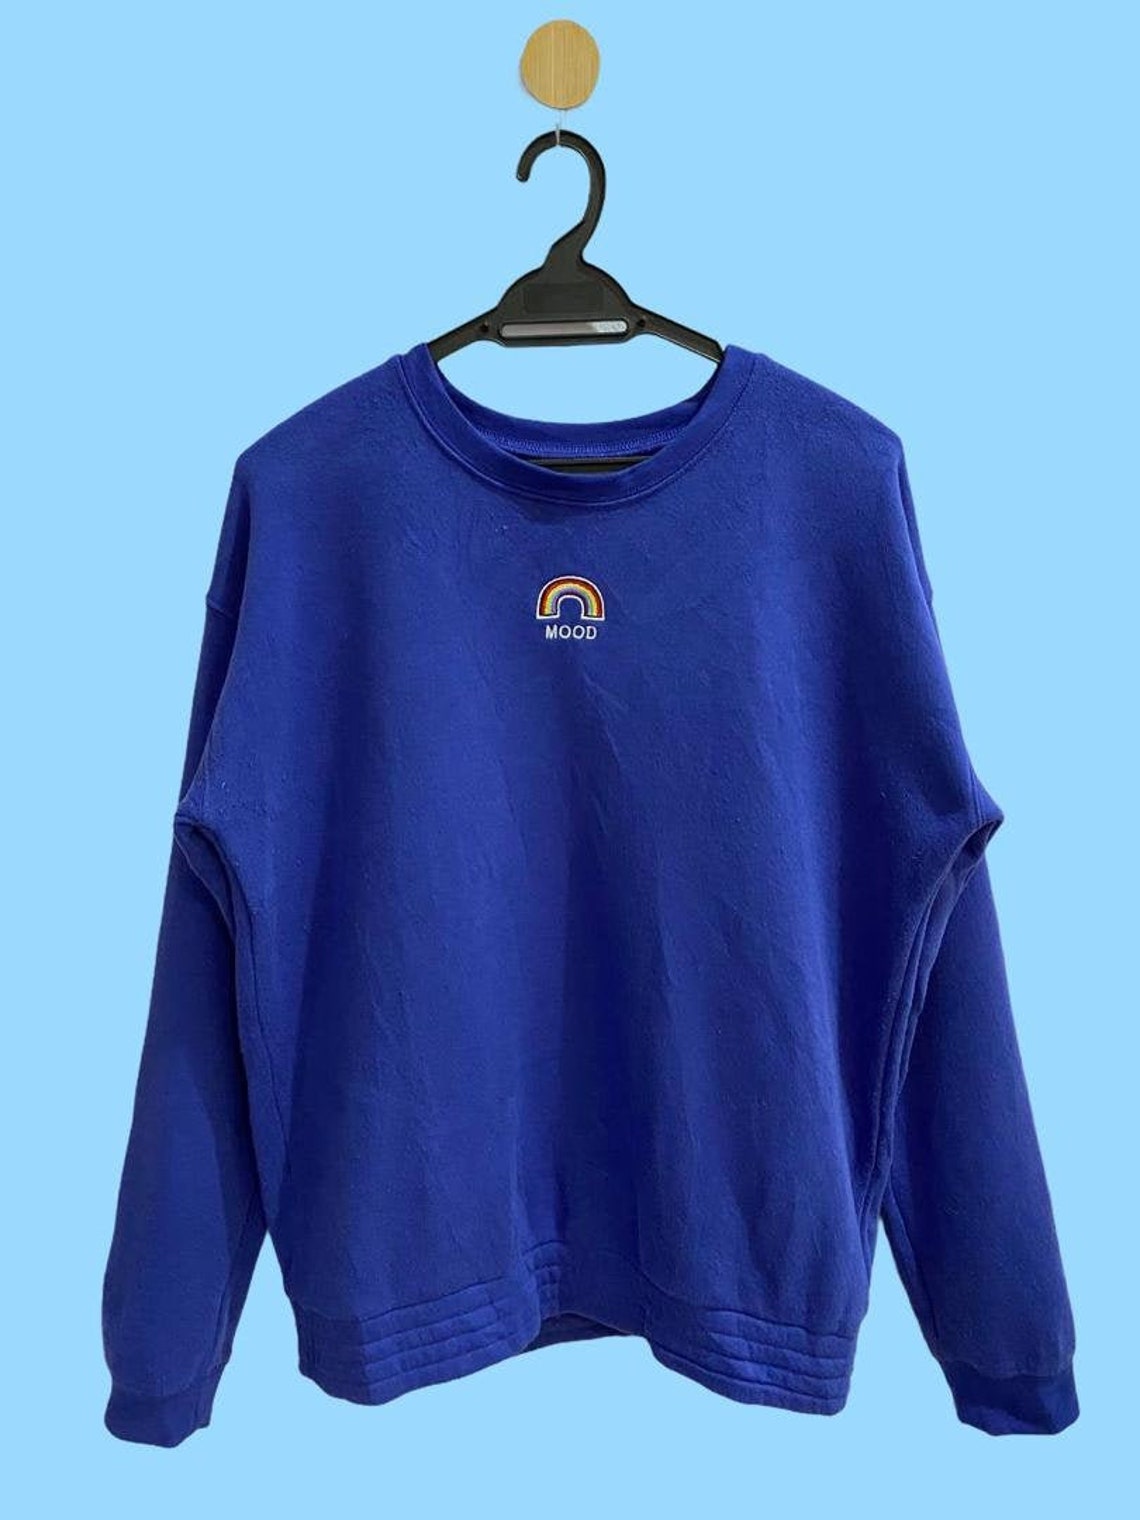 Vintage 90s Mood Sweatshirt Jumper Joe Boxer Crewneck Pullover | Etsy